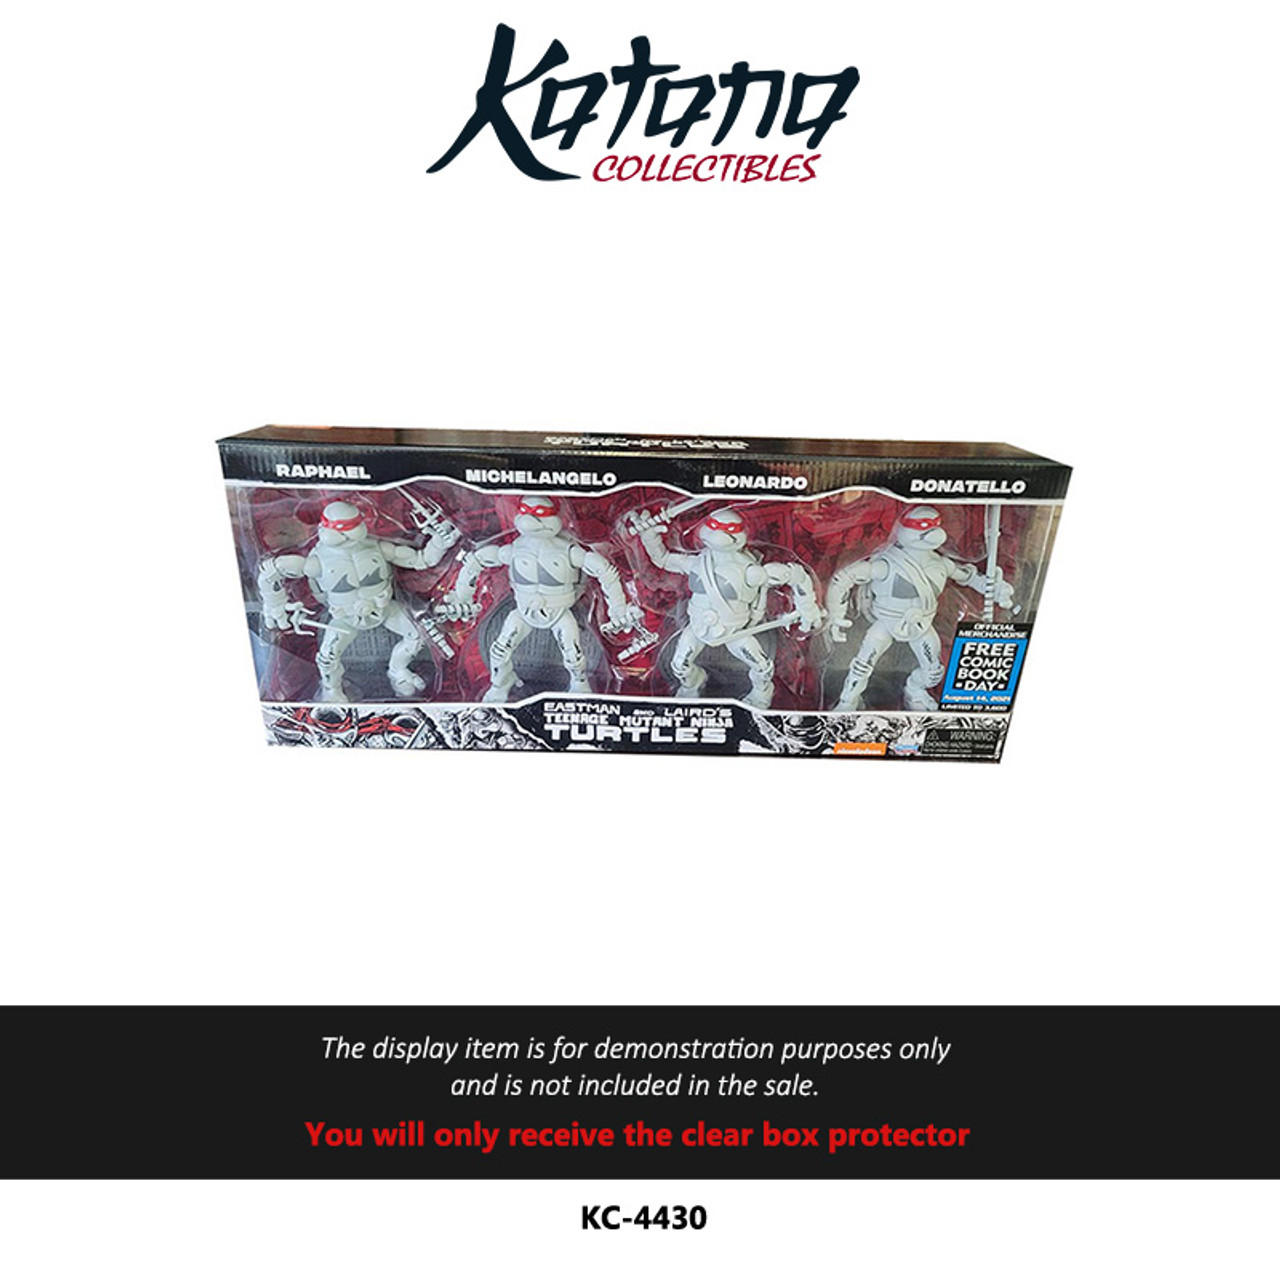 Katana Collectibles Protector For Teenage Mutant Ninja Turtles Ninja Elite Series PX B&W 4-Pack Set Figures